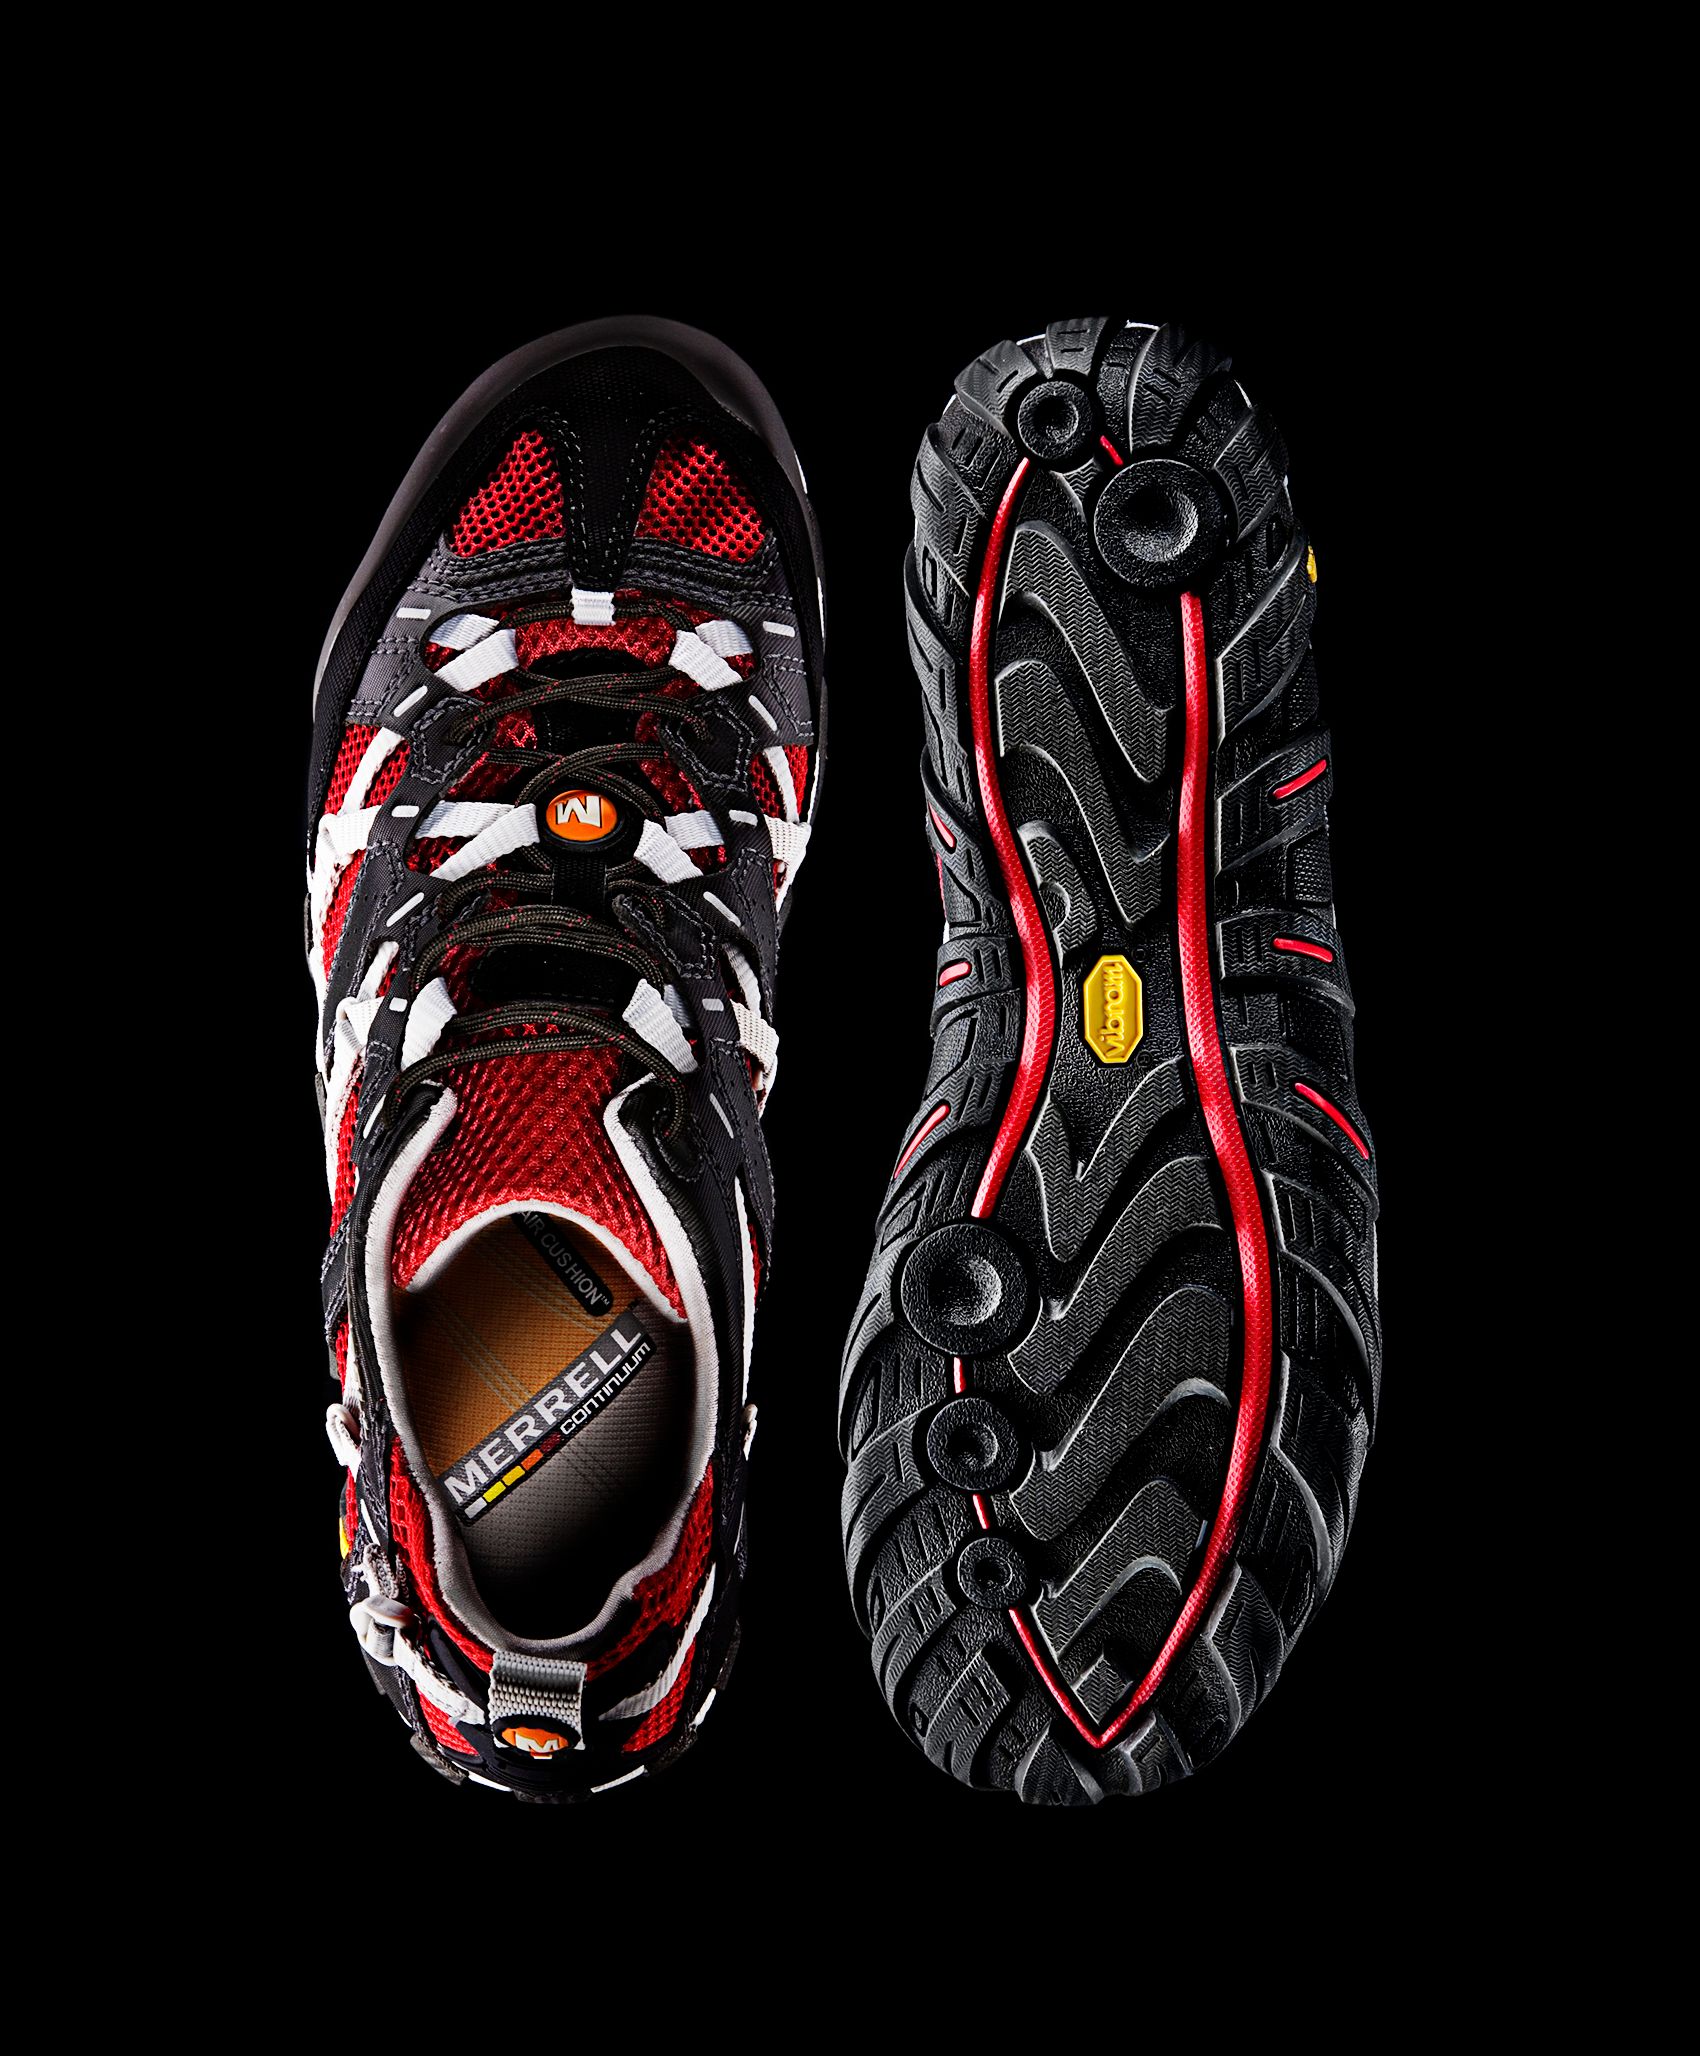 merrell shoe-red pair.jpg